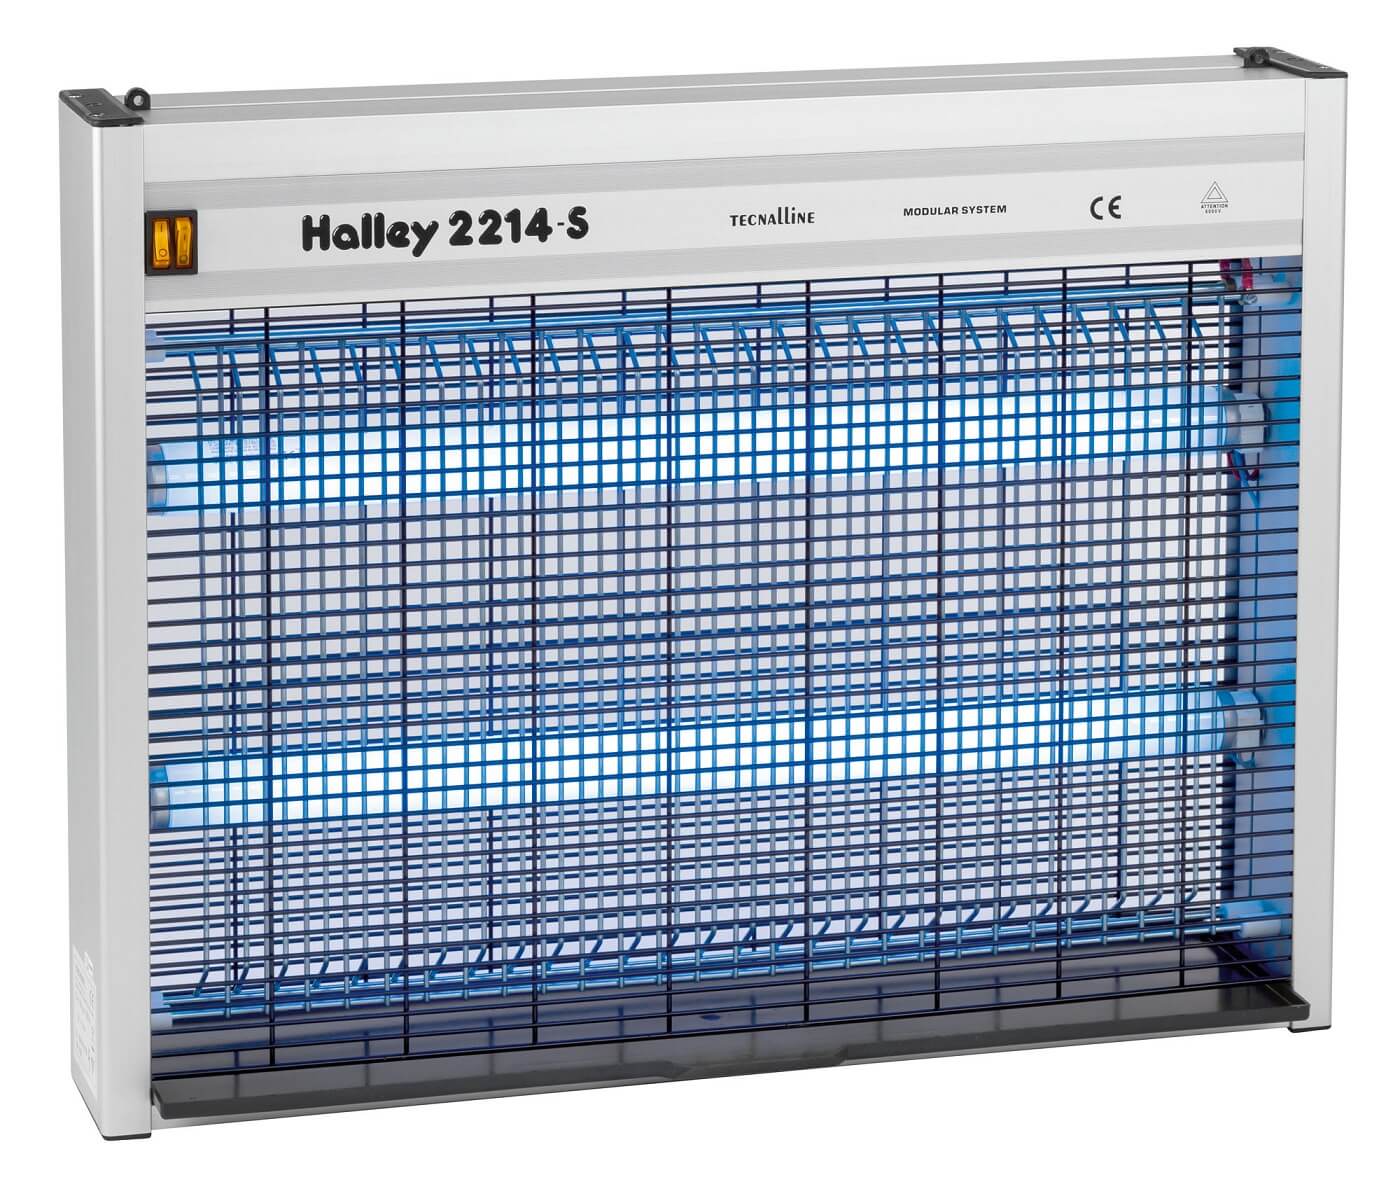 Fliegenvernichter Halley 2214-S, 2 x 20 Watt